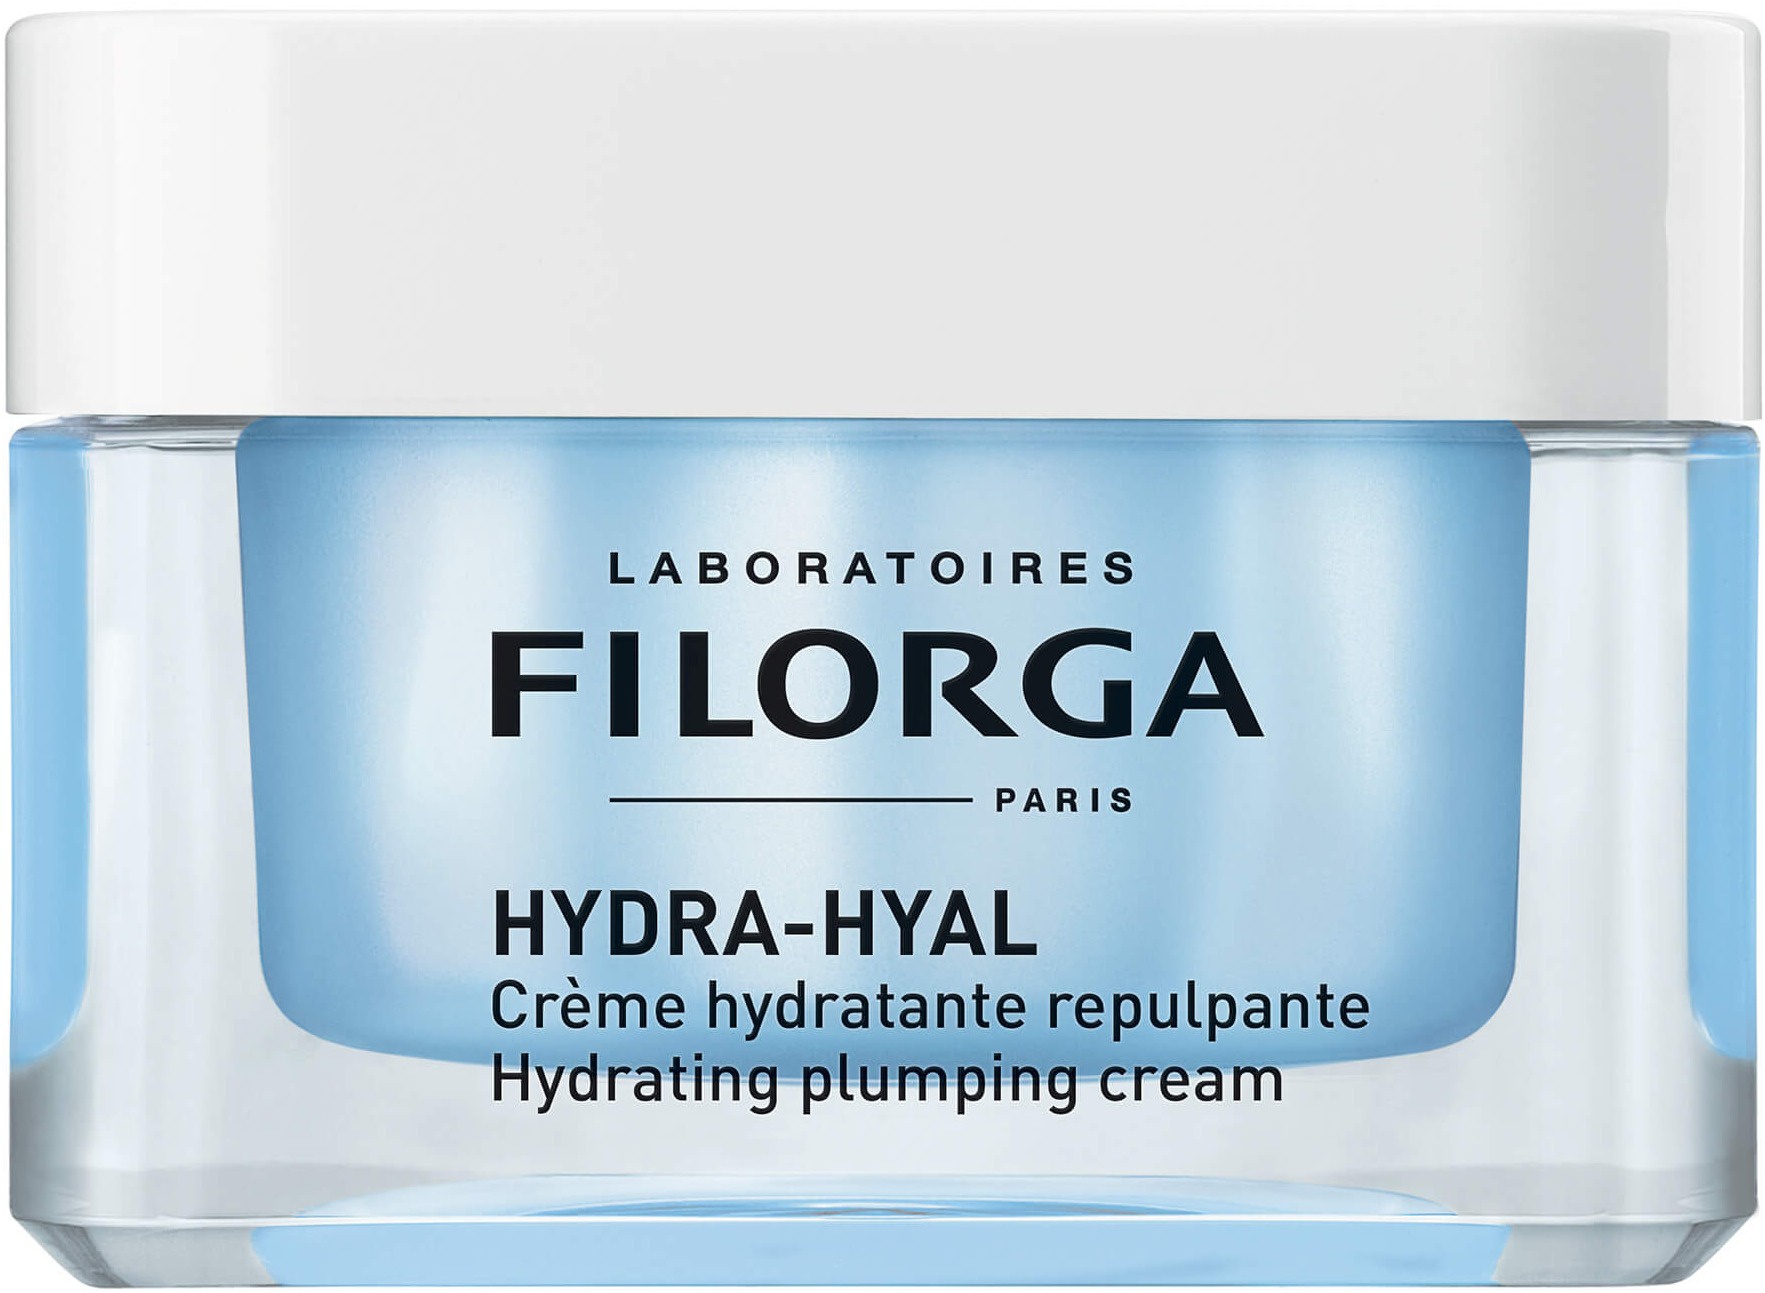 Filorga Laboratories Hydra-hyal Hydrating plumping cream